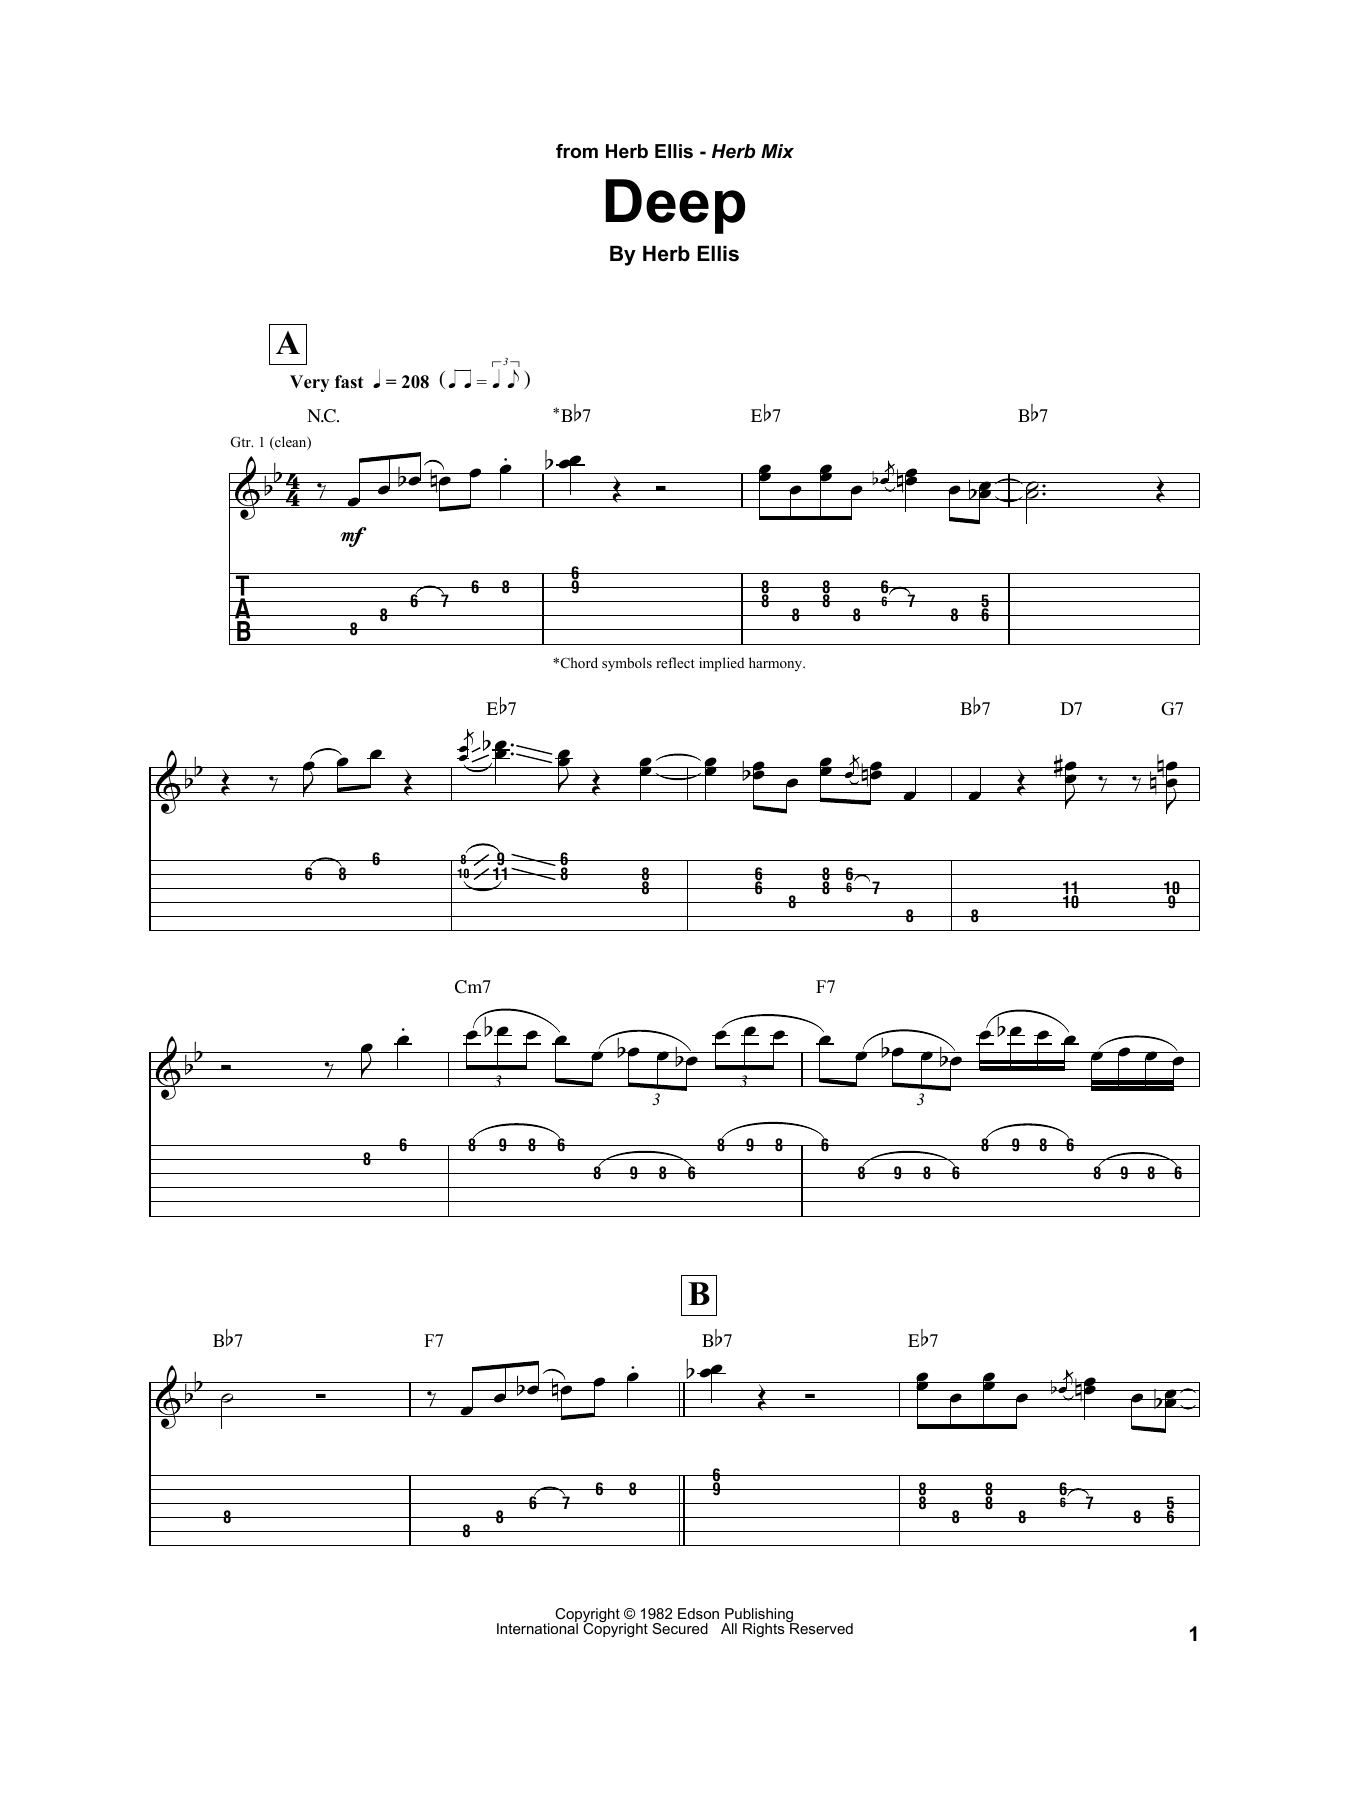 Herb Ellis Deep Sheet Music Notes & Chords for Electric Guitar Transcription - Download or Print PDF